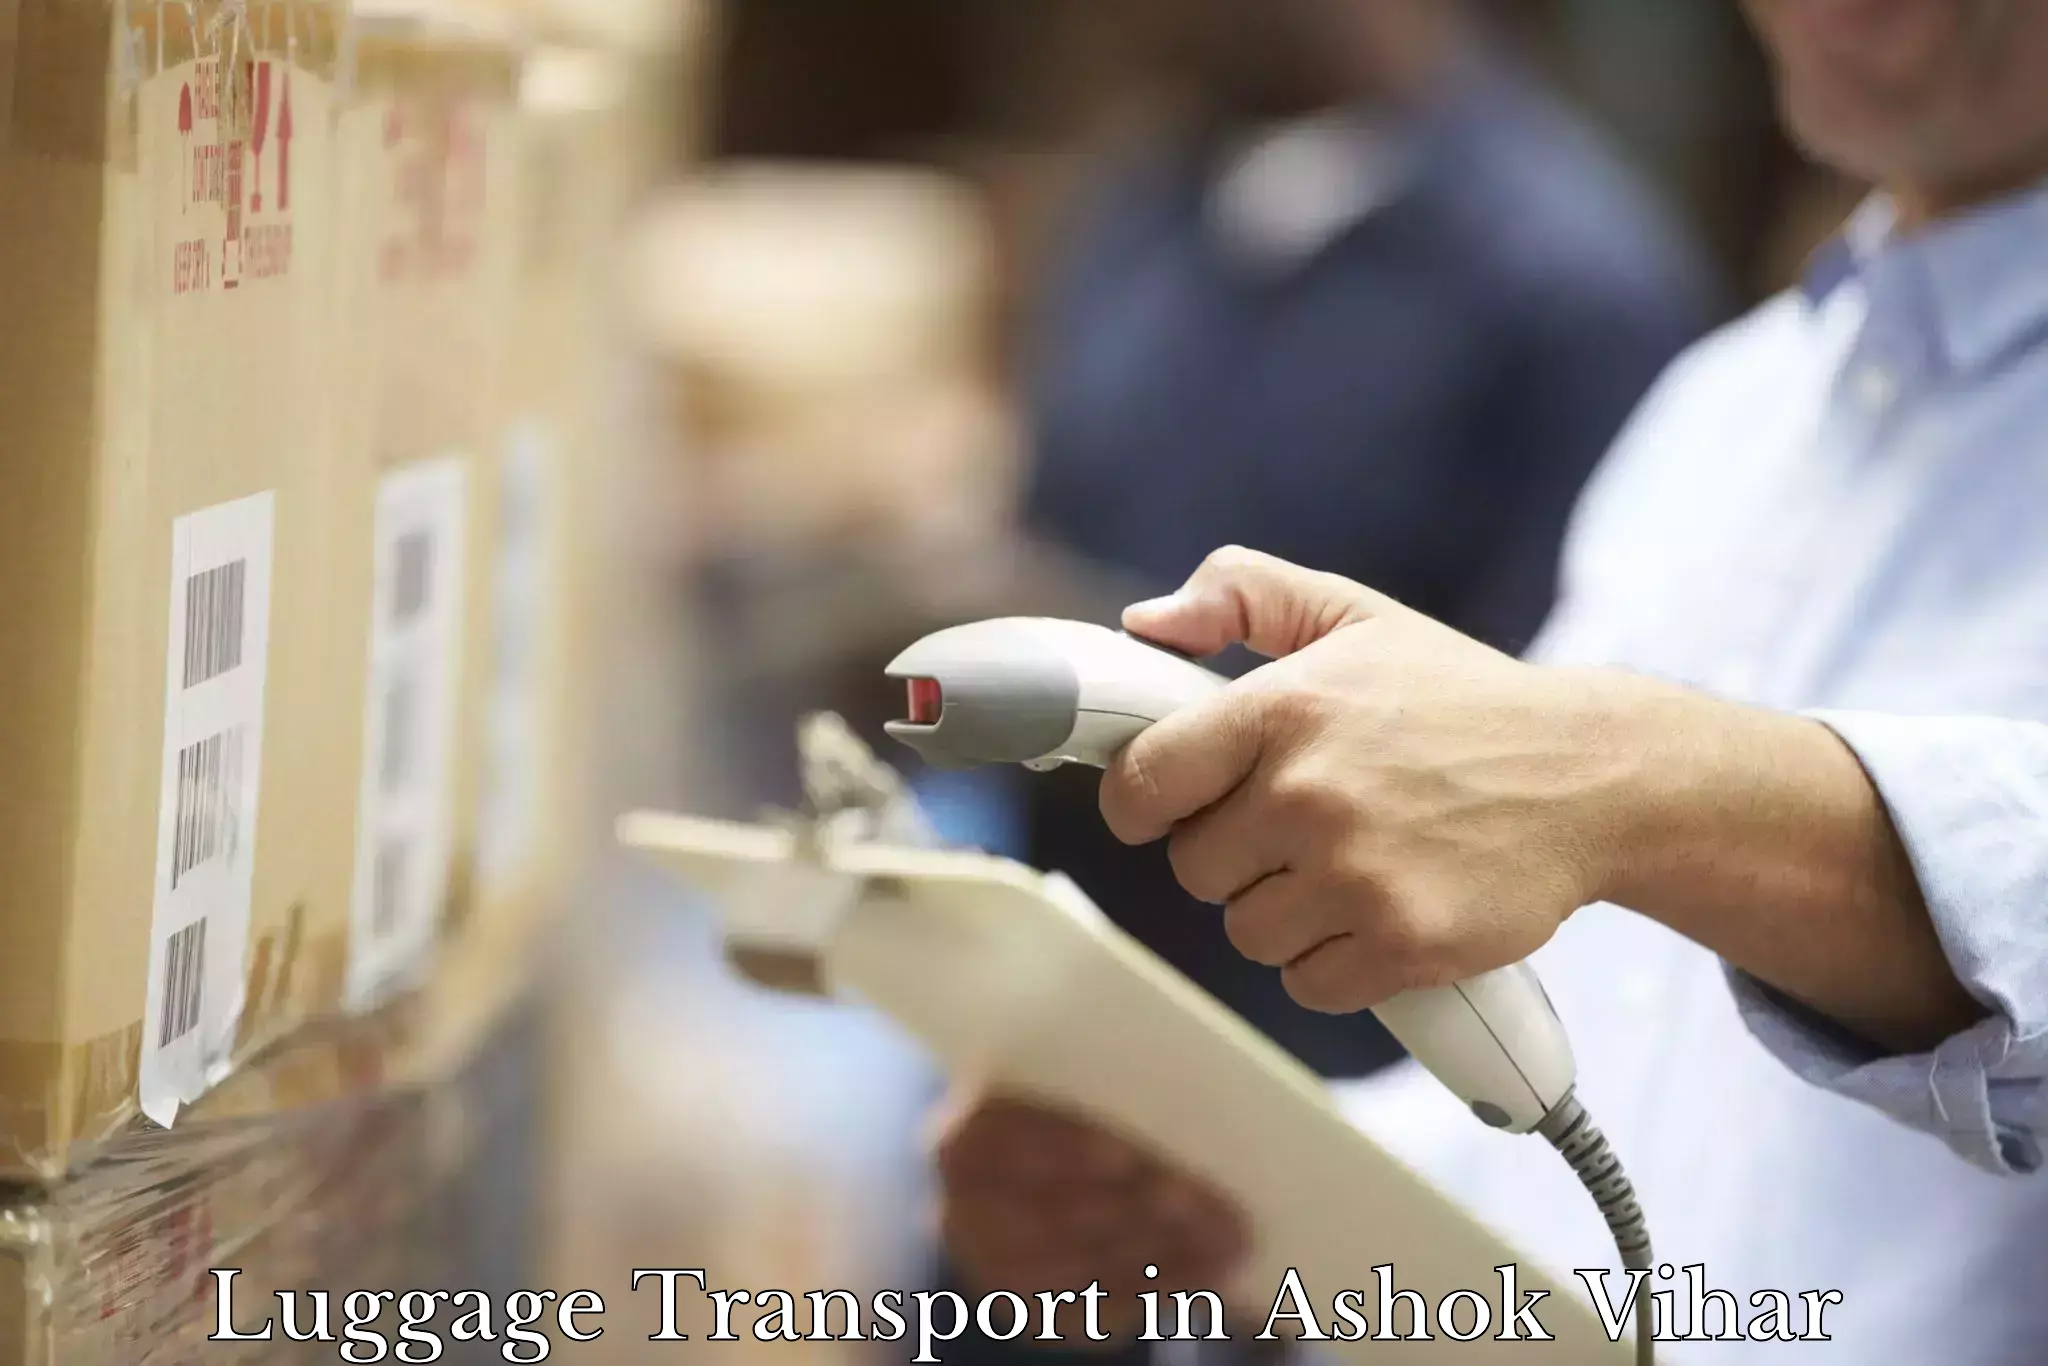 Baggage transport innovation in Ashok Vihar